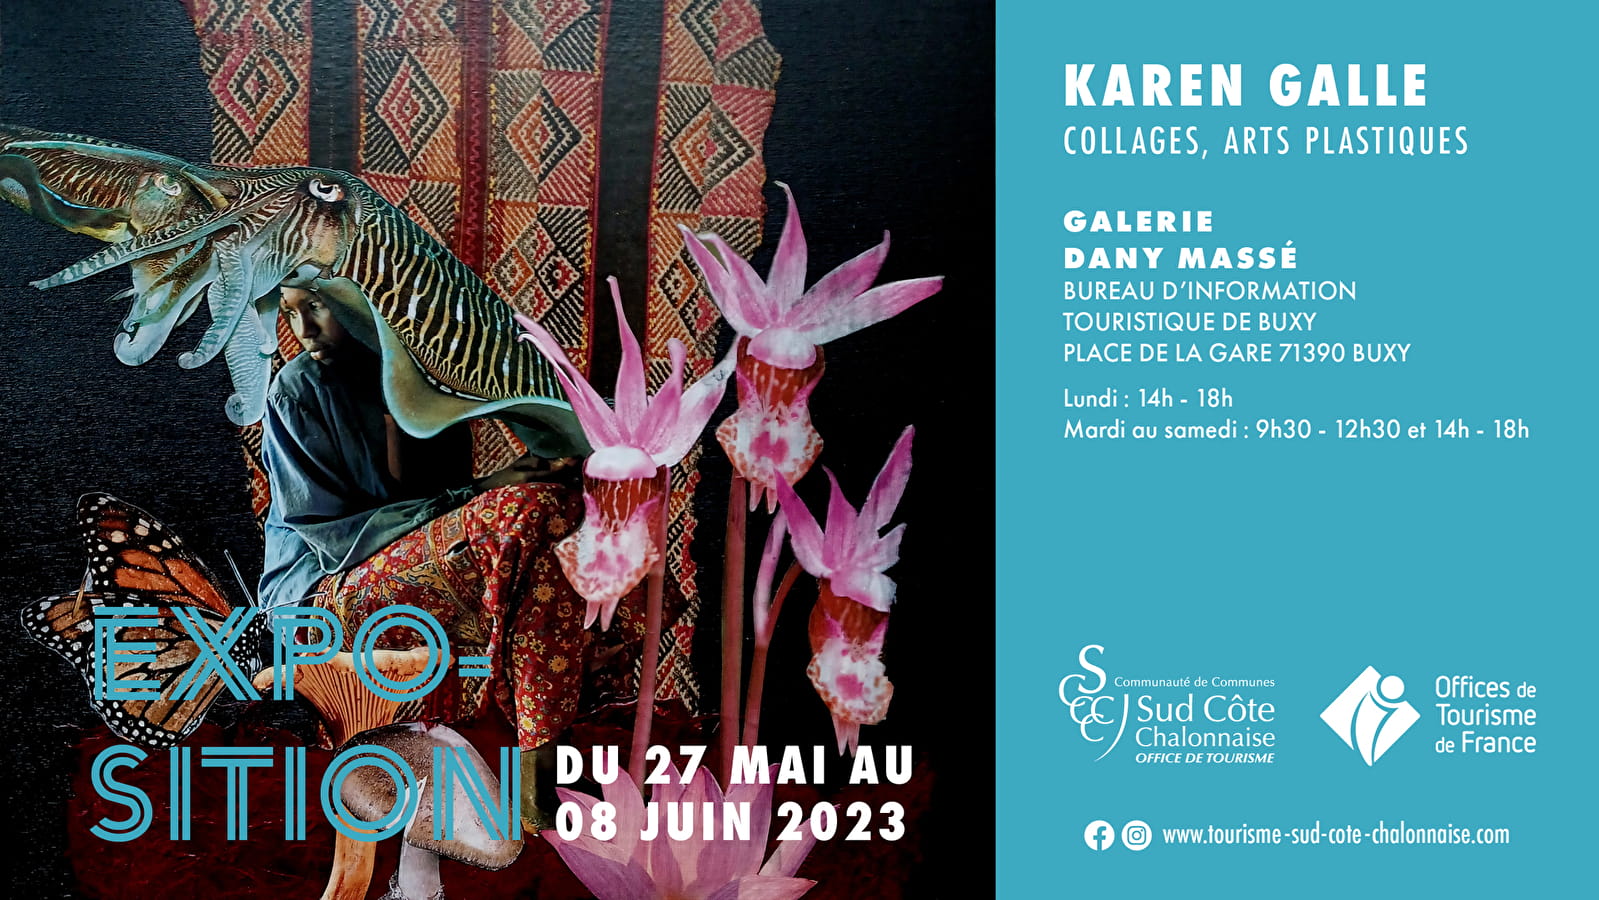 Exhibition of Karen GALLE